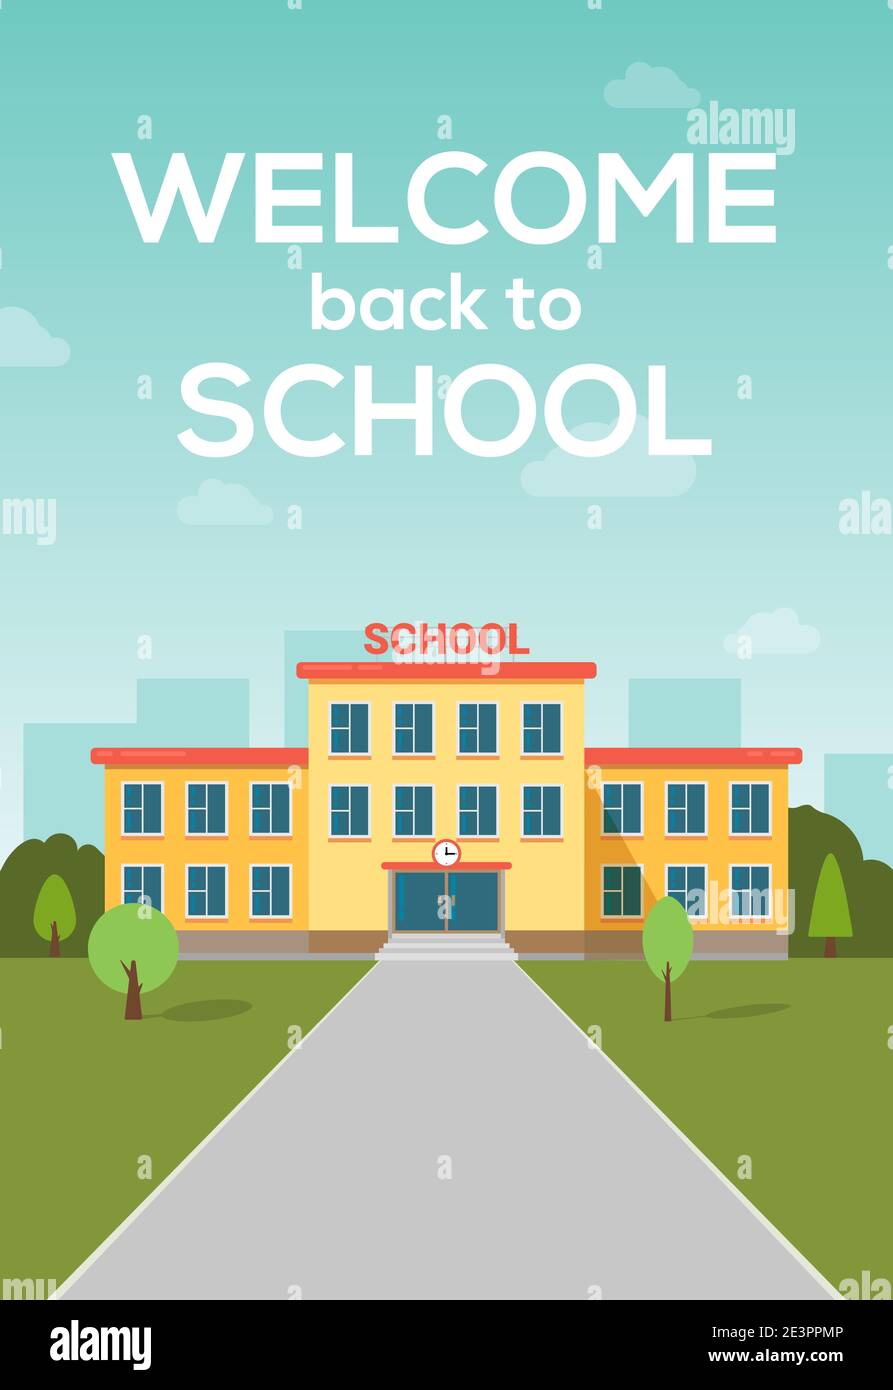 School building vector poster background. Welcome school education building campus cartoon Stock Vector